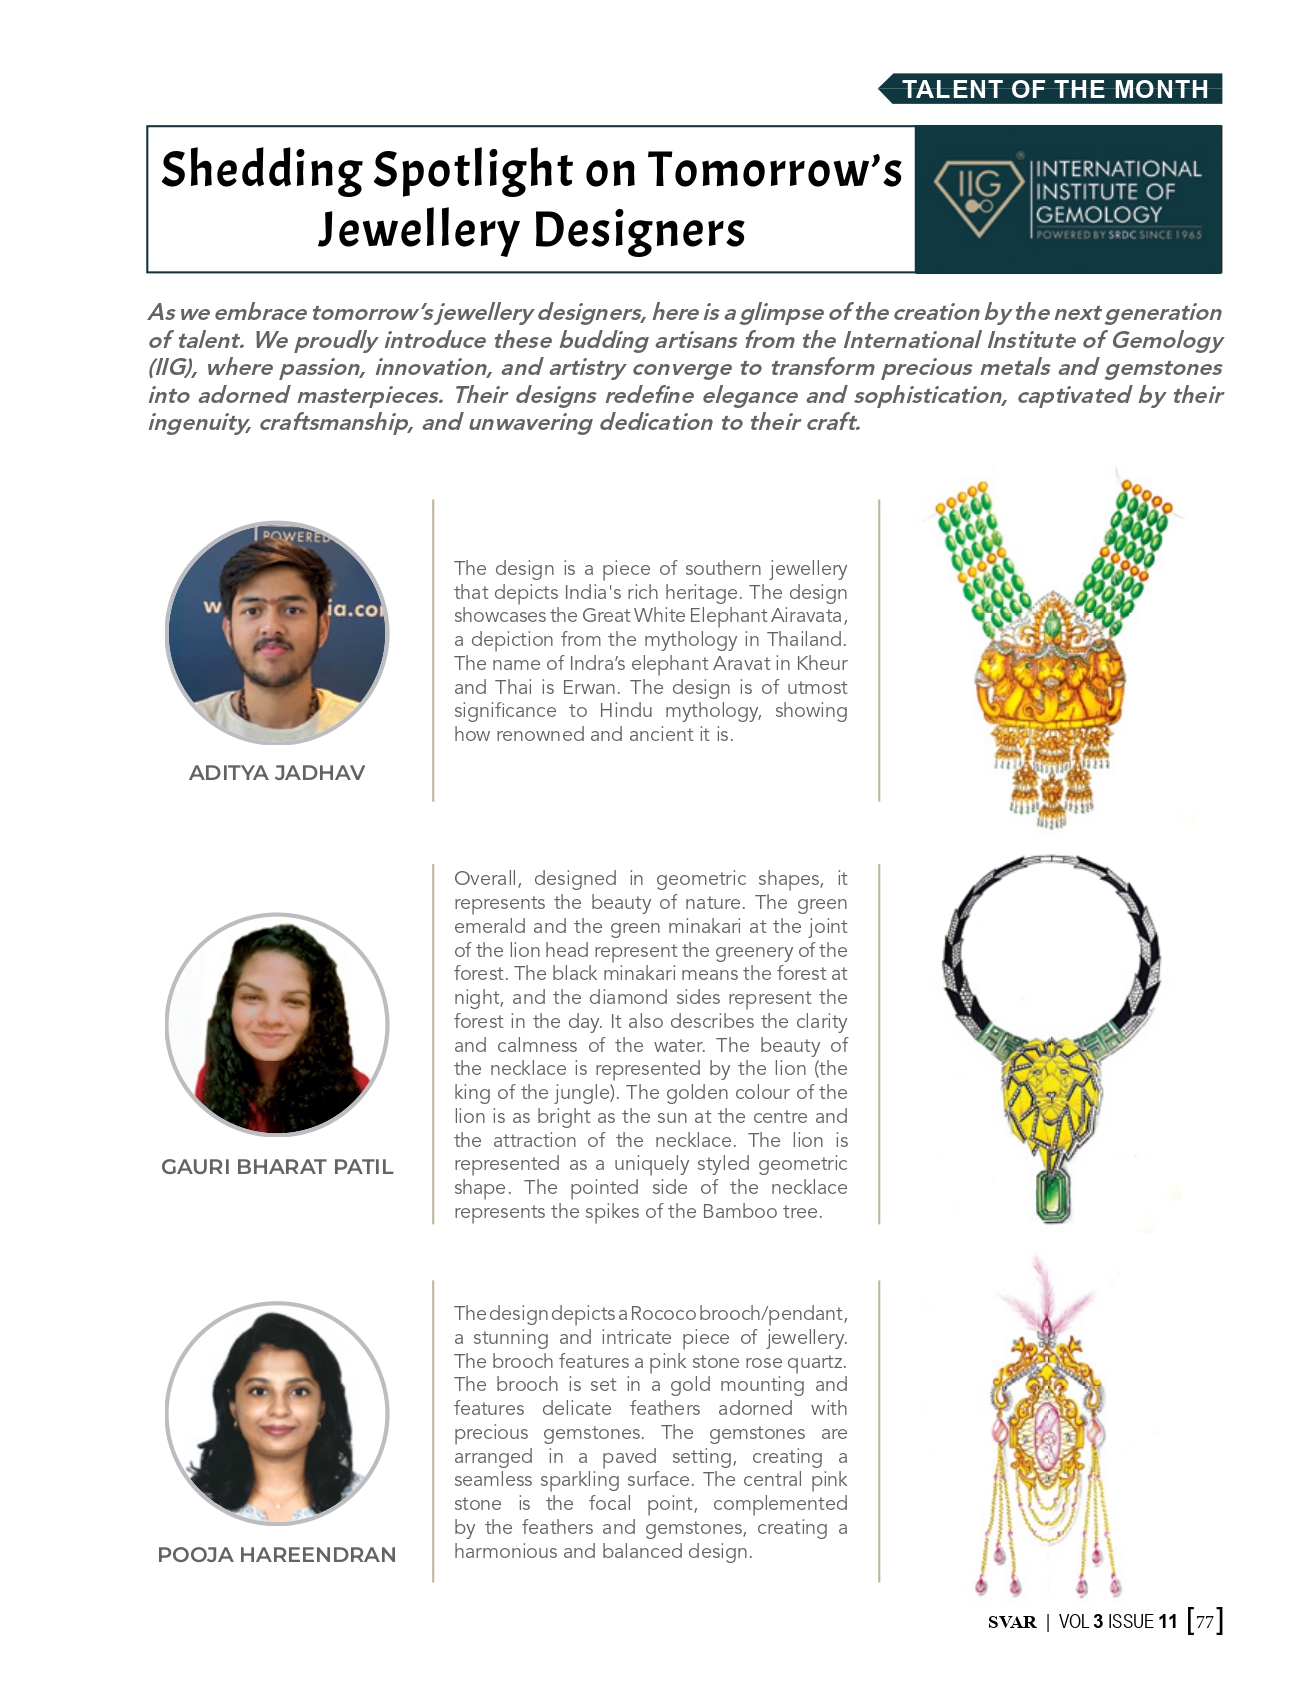 Master in Gems & Jewellery